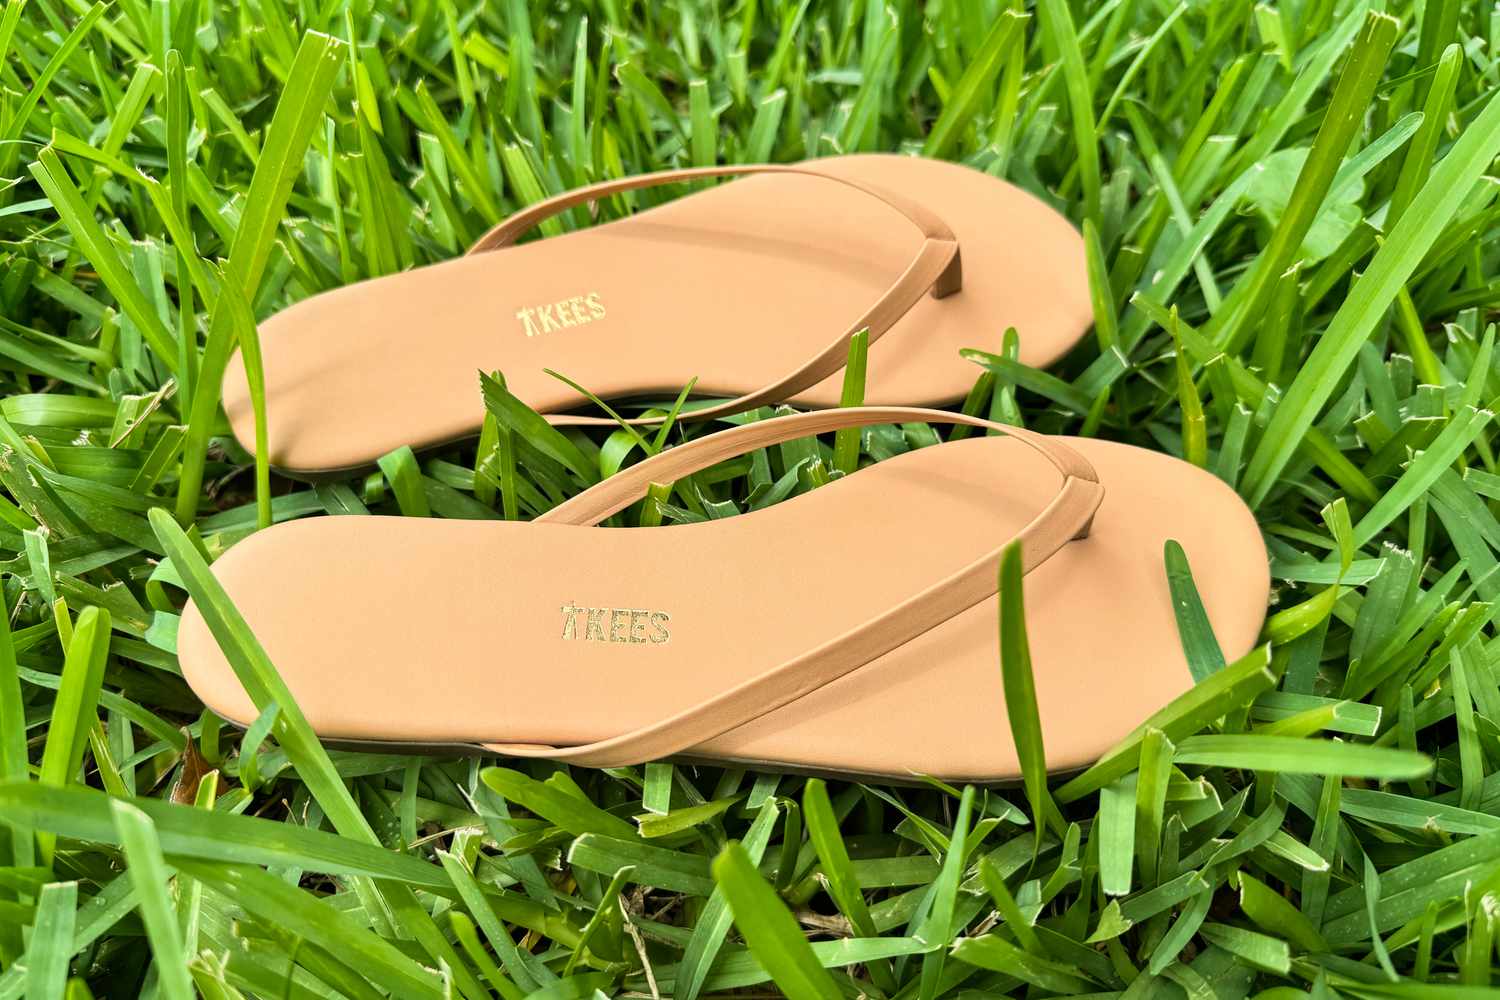 Tkees Flip-Flop Sandals in grass 